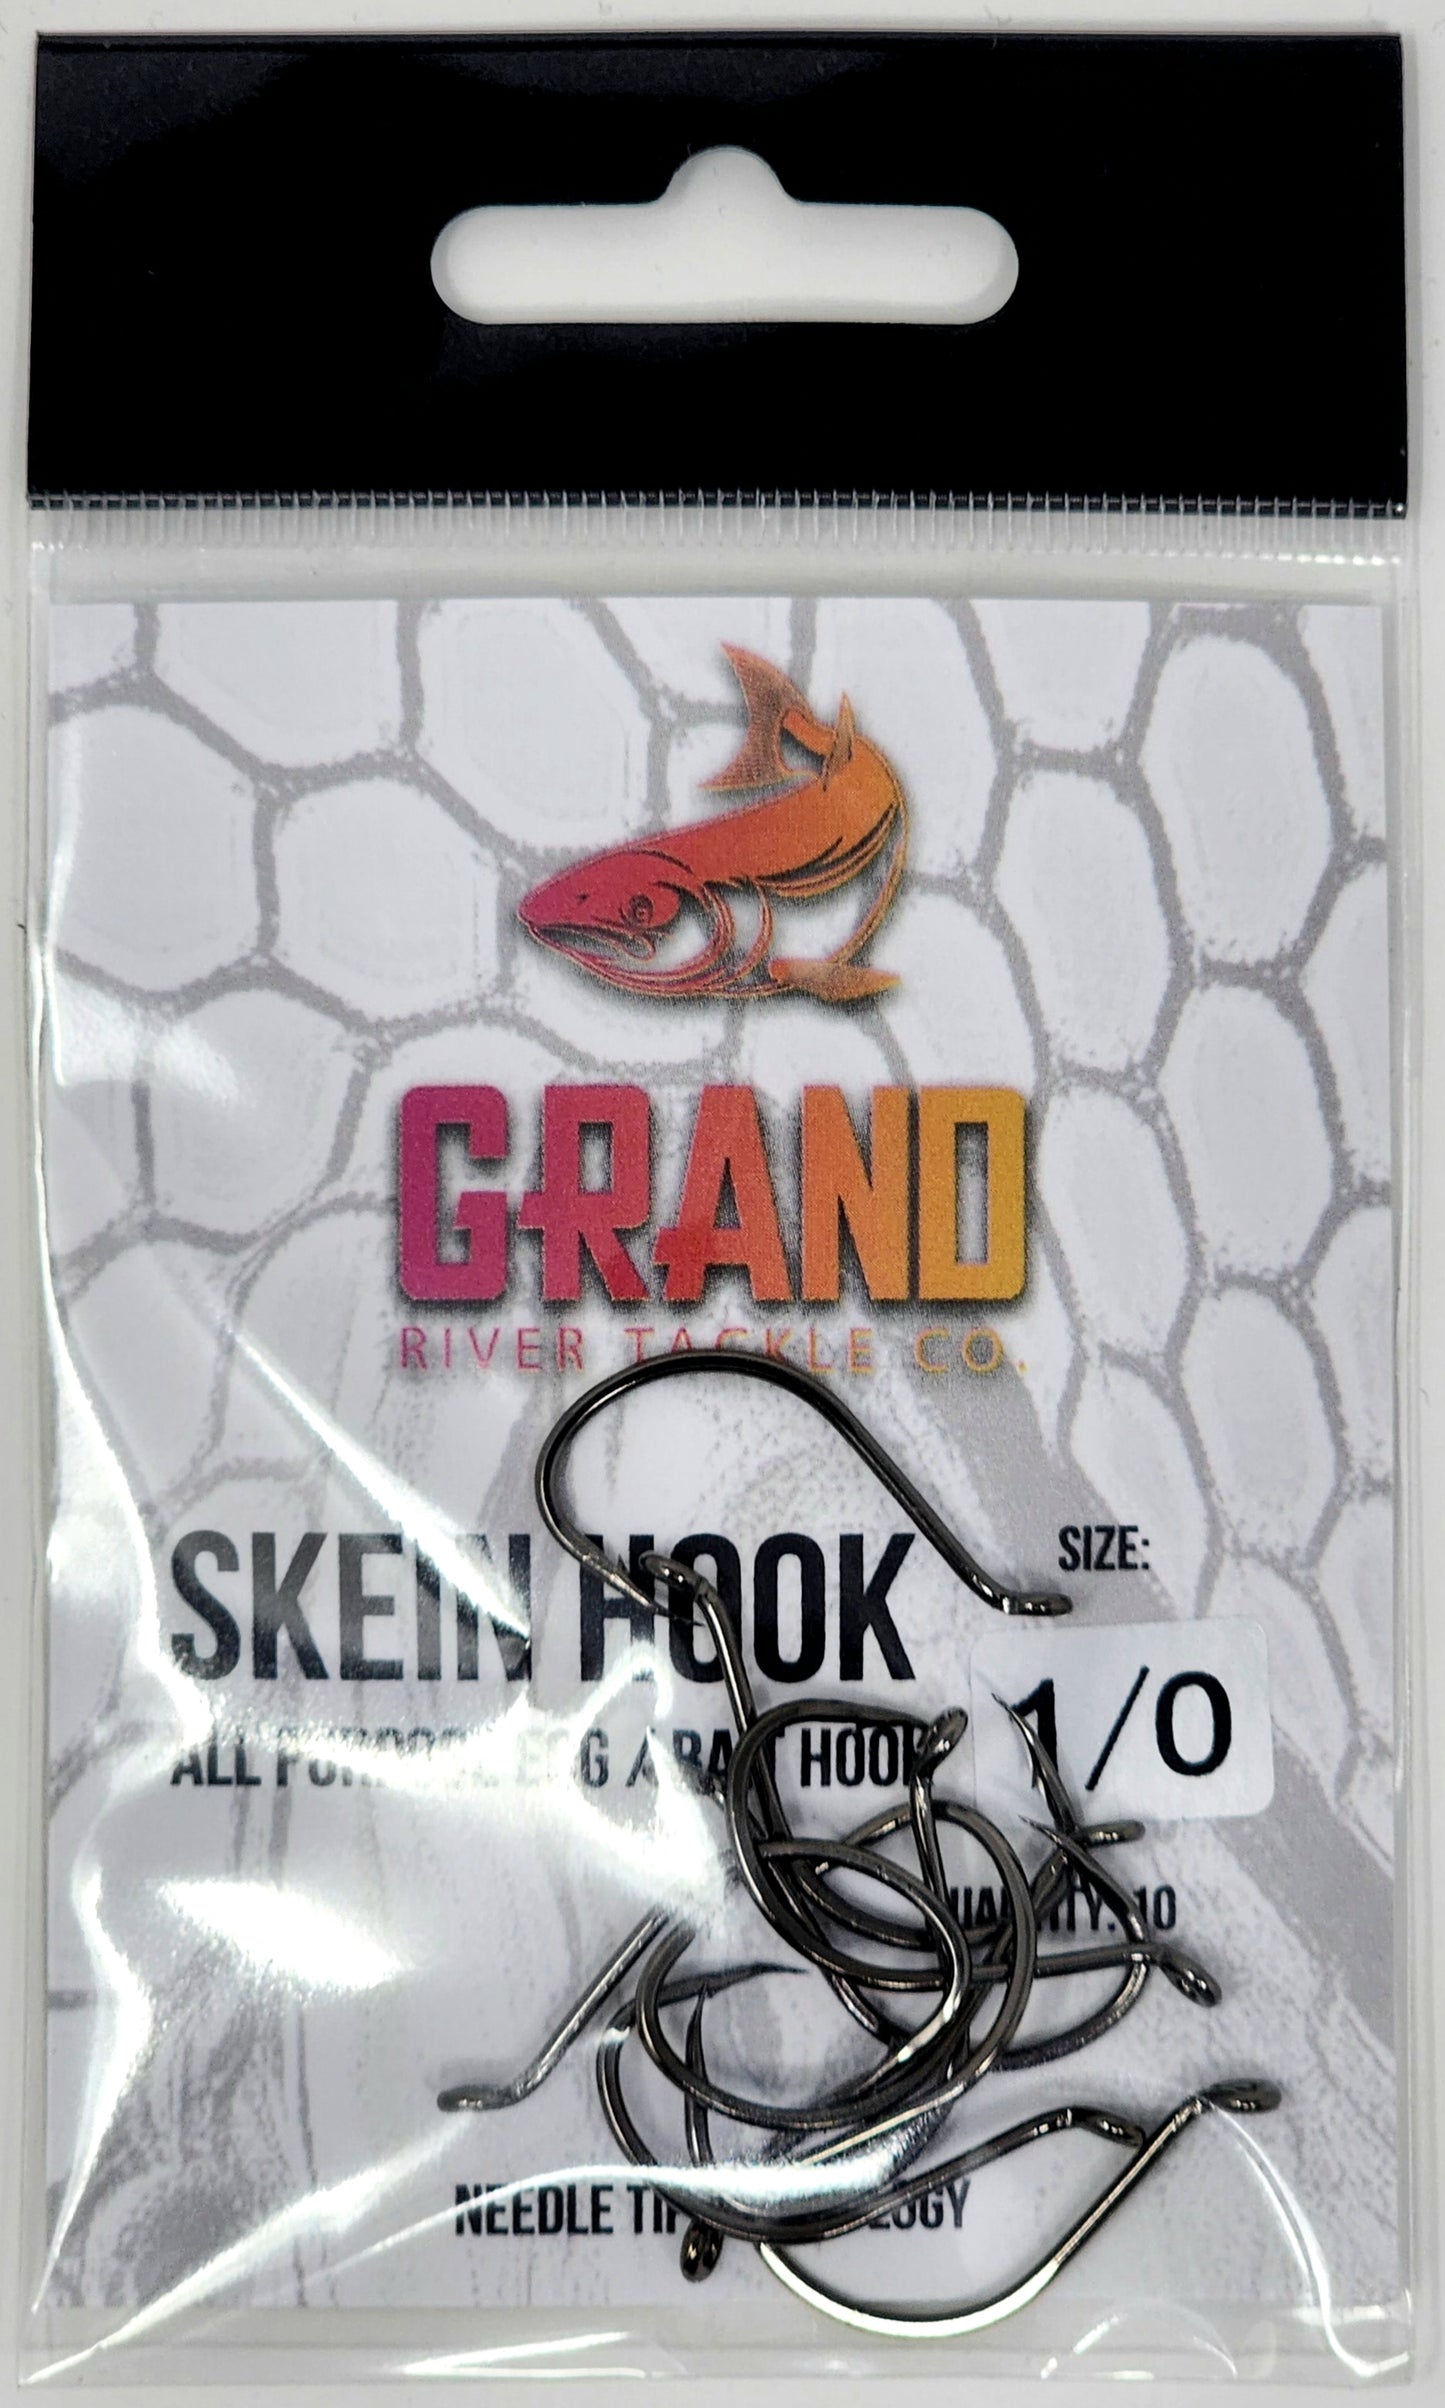 Salmon Steelhead All Purpose Bait / Bead / Bag Hook Offset Eye – Grand  River Tackle